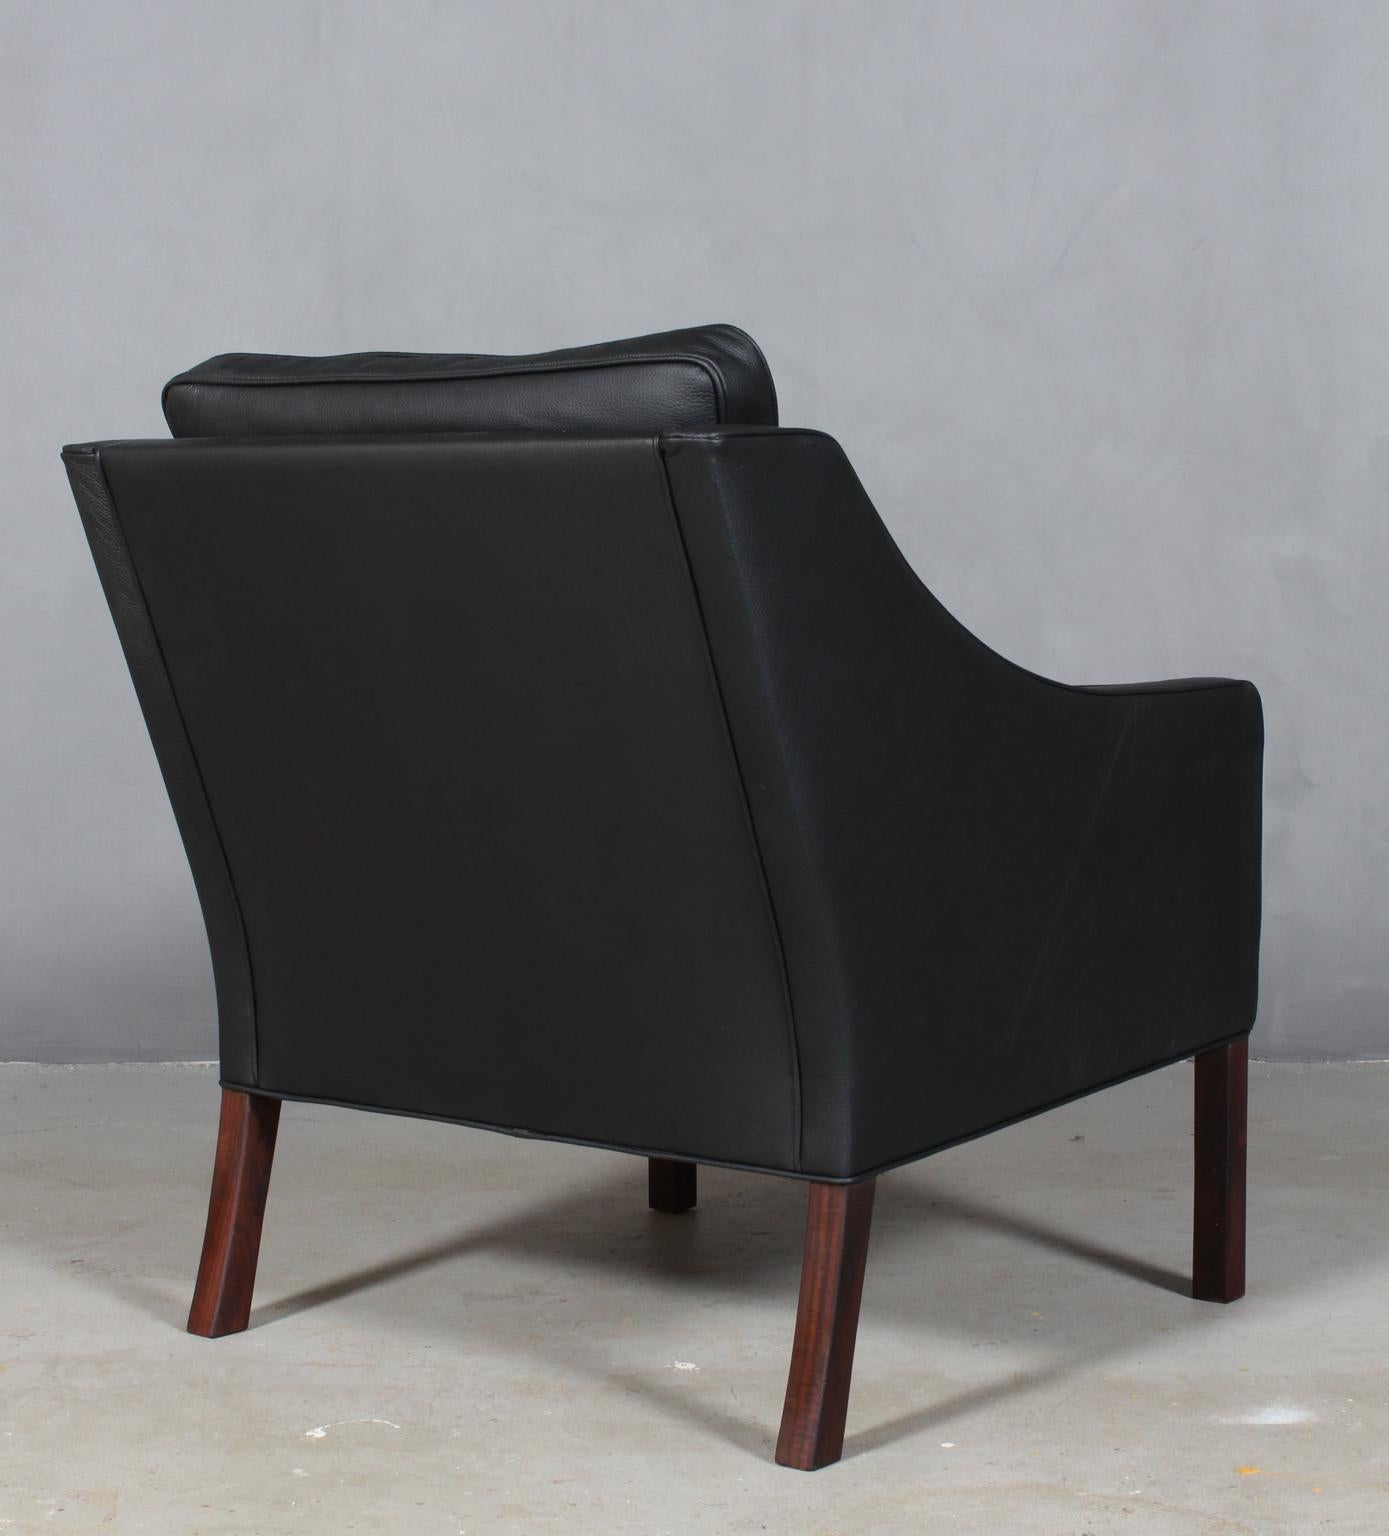 Scandinavian Modern Børge Mogensen Lounge Chair, Model 2207, New black leather upholstery